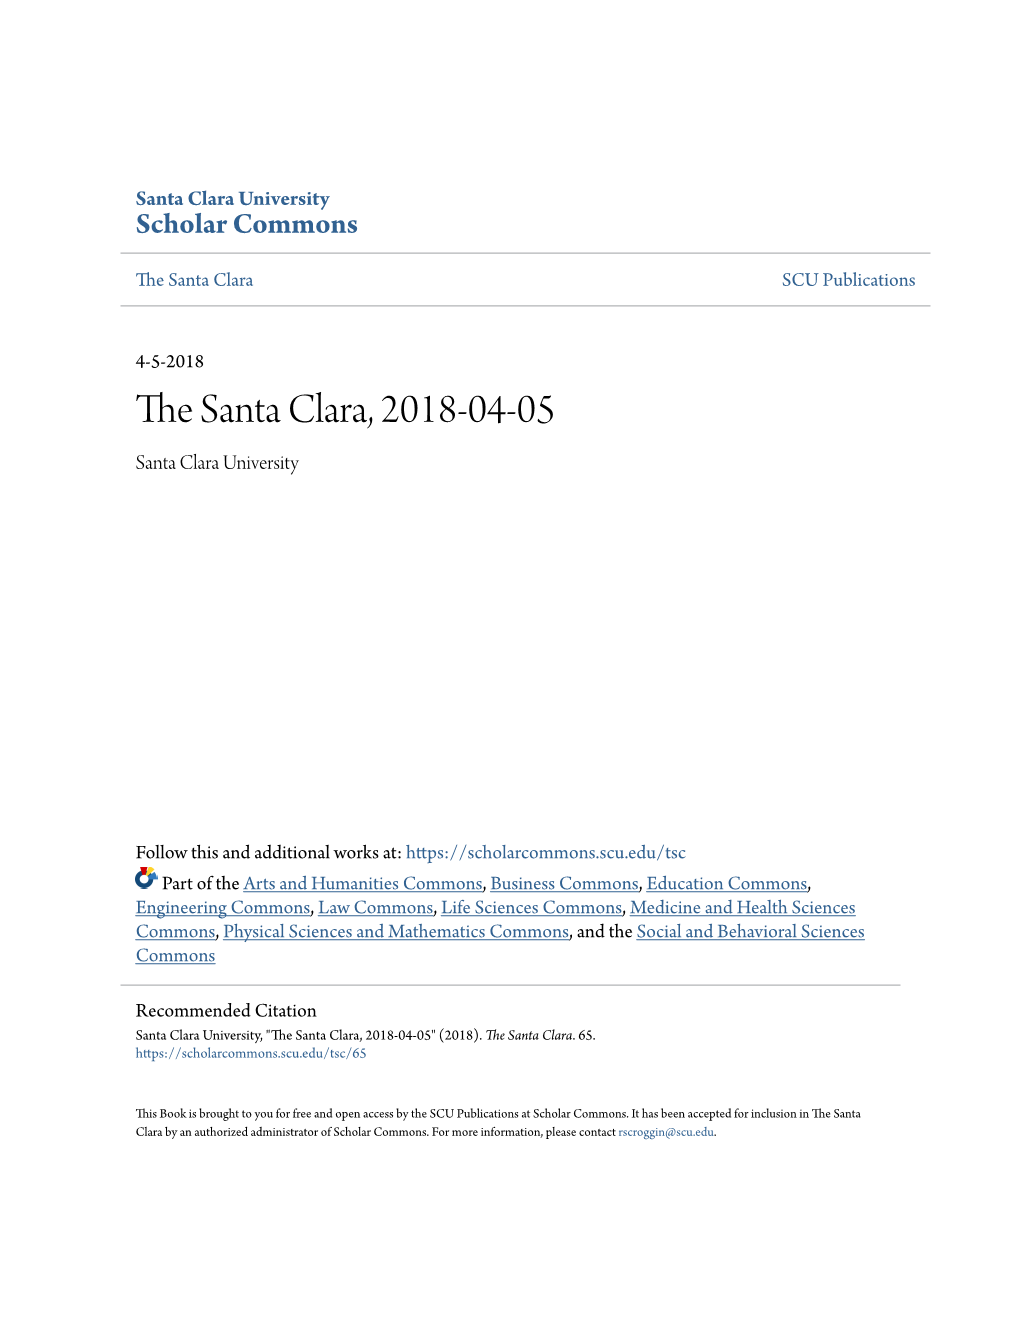 The Santa Clara, 2018-04-05